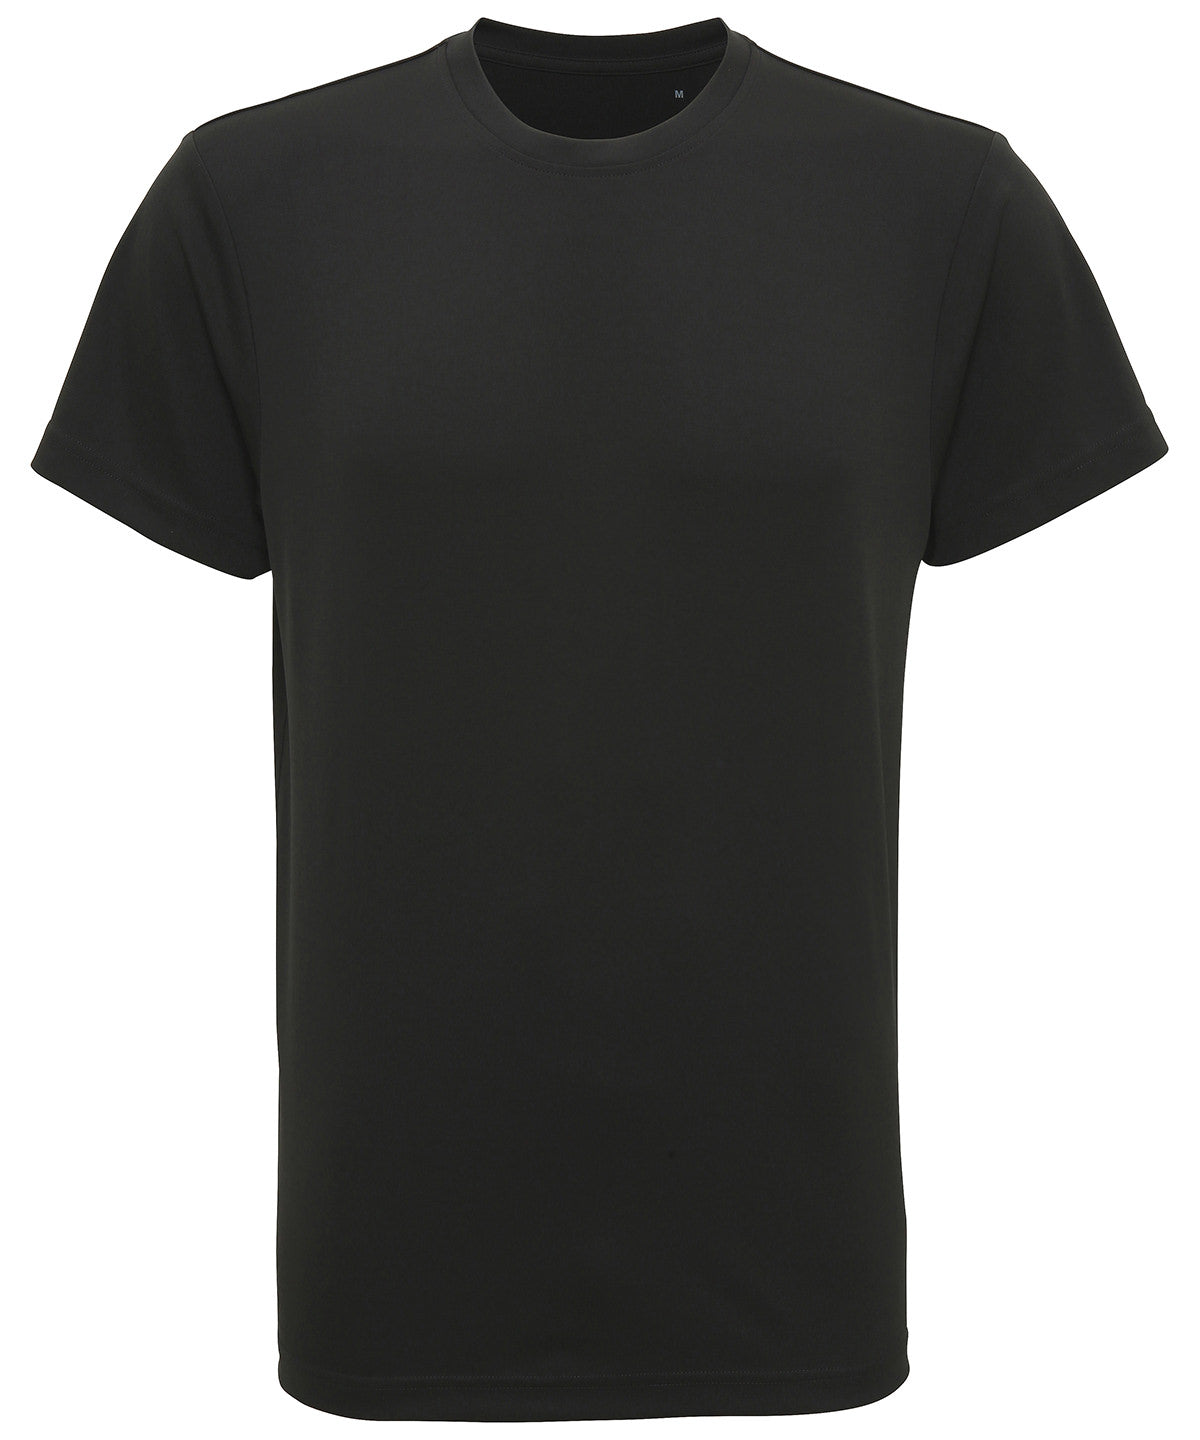 TriDri Performance T-Shirt Charcoal